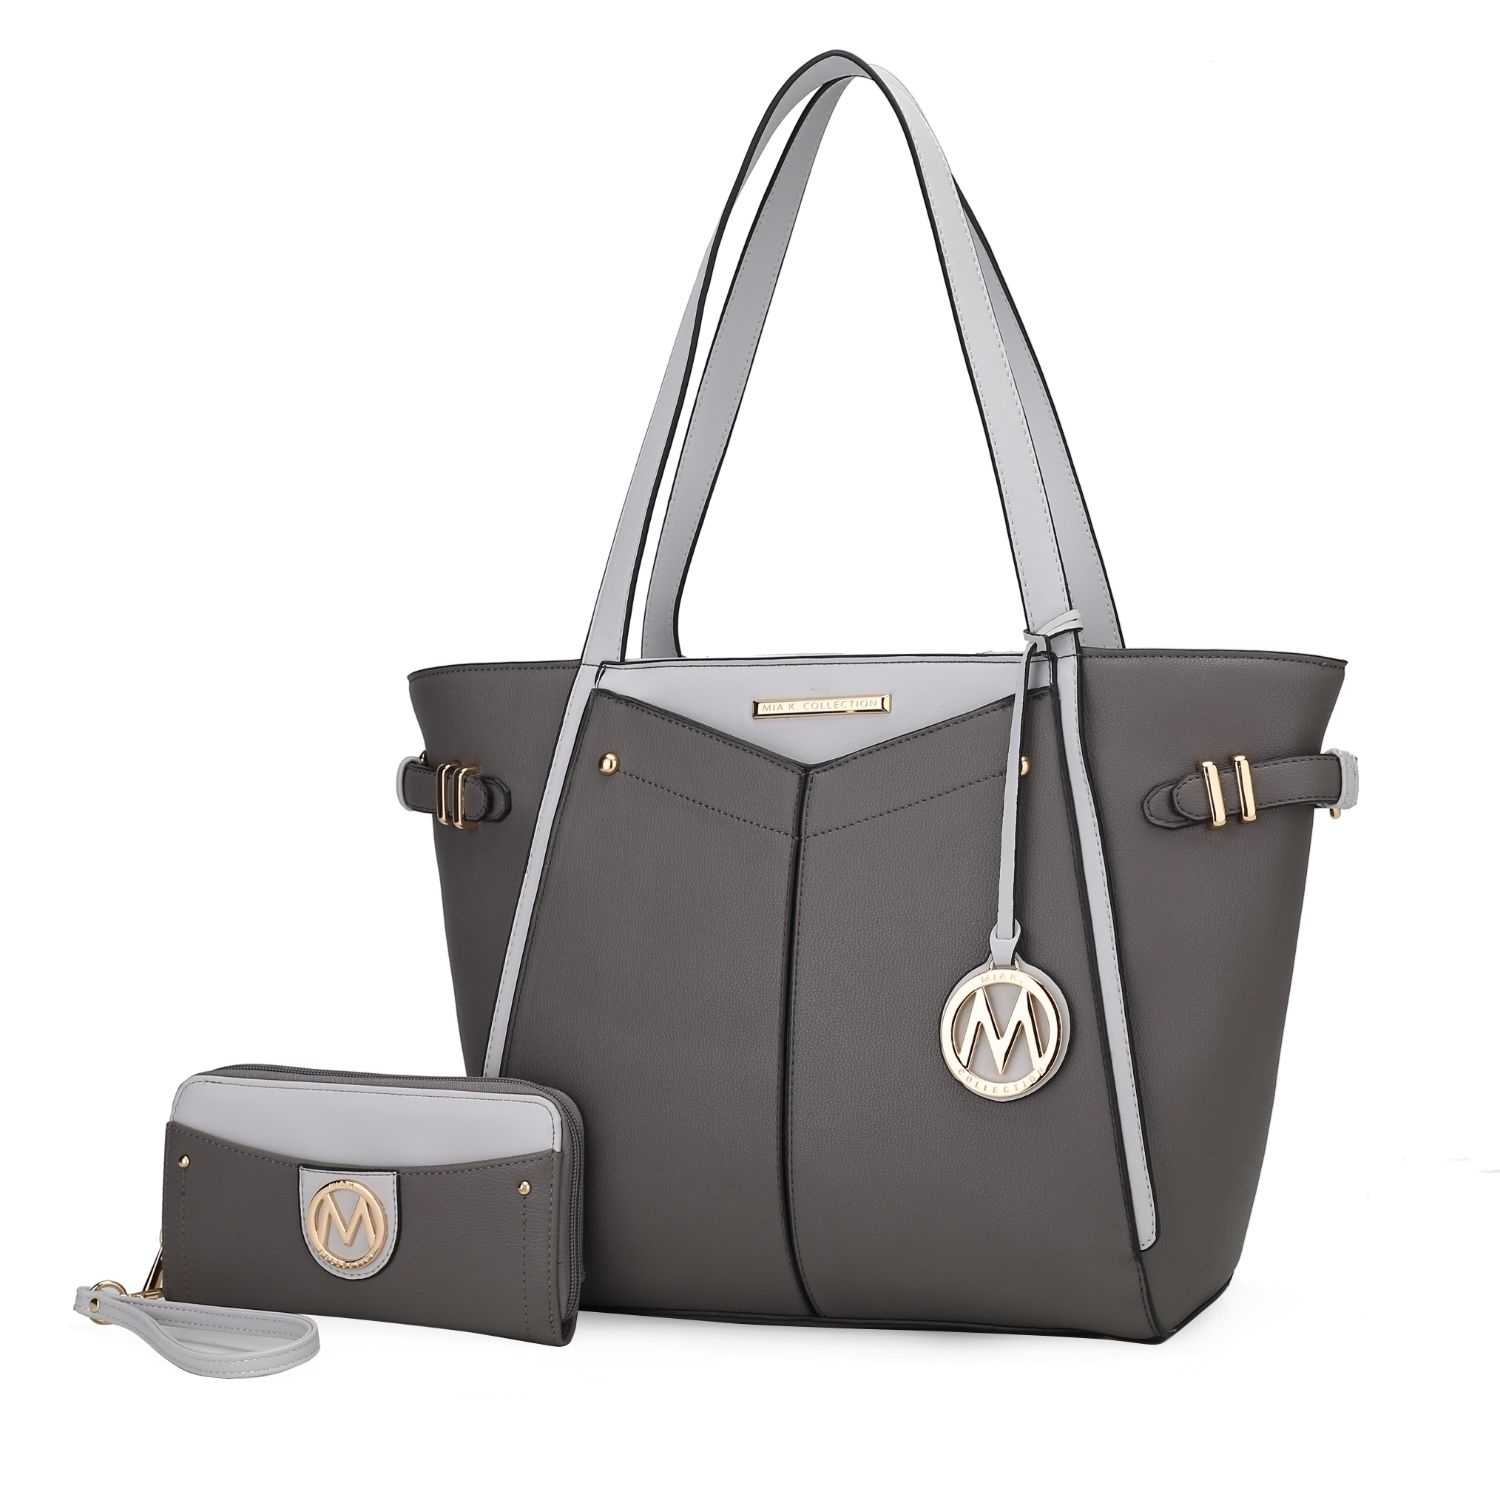 MKF Collection Morgan Tote Handbag By Mia K. - Caharcoal Light Gray